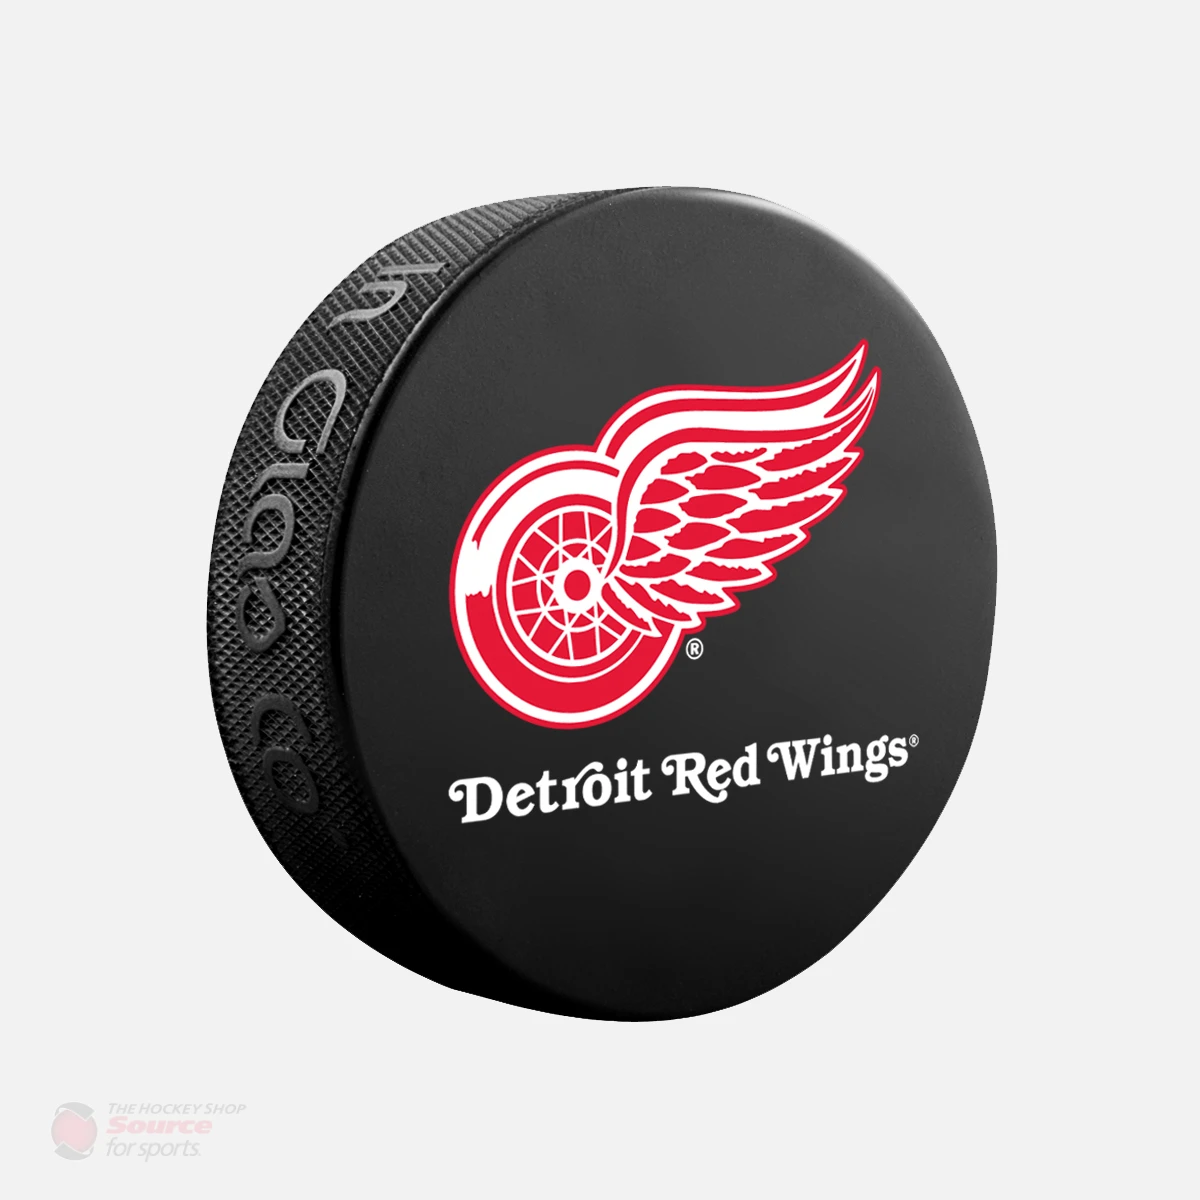 Pavel Datsyuk Autographed Detroit Red Wings Fanatics Jersey - NHL Auctions